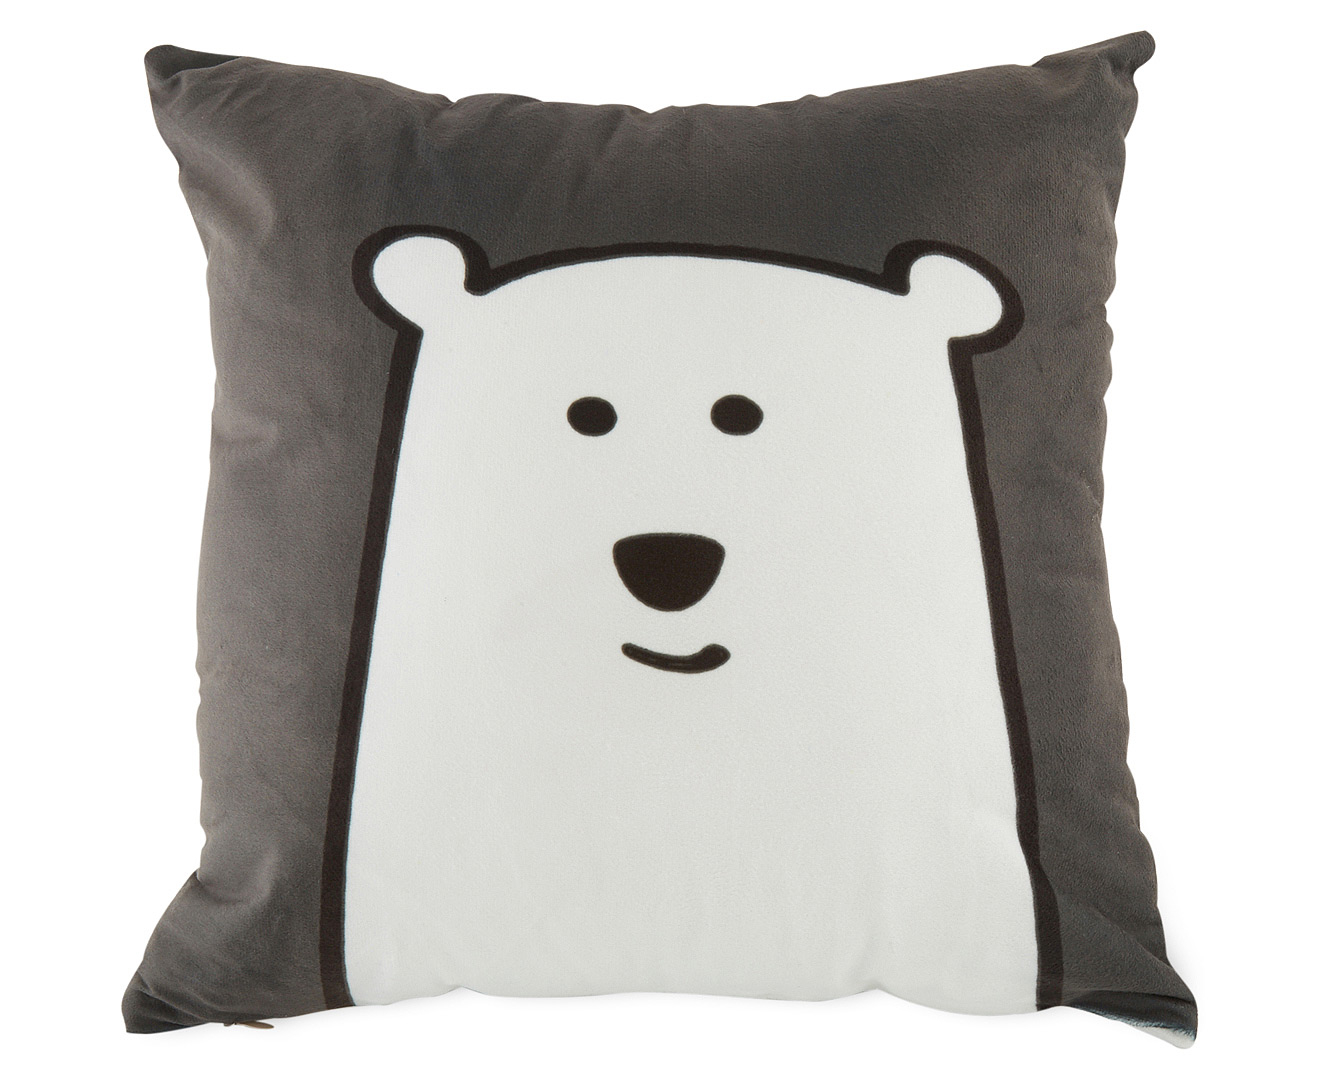 Kids Concepts Bear Square Cushion - Grey/Black/White